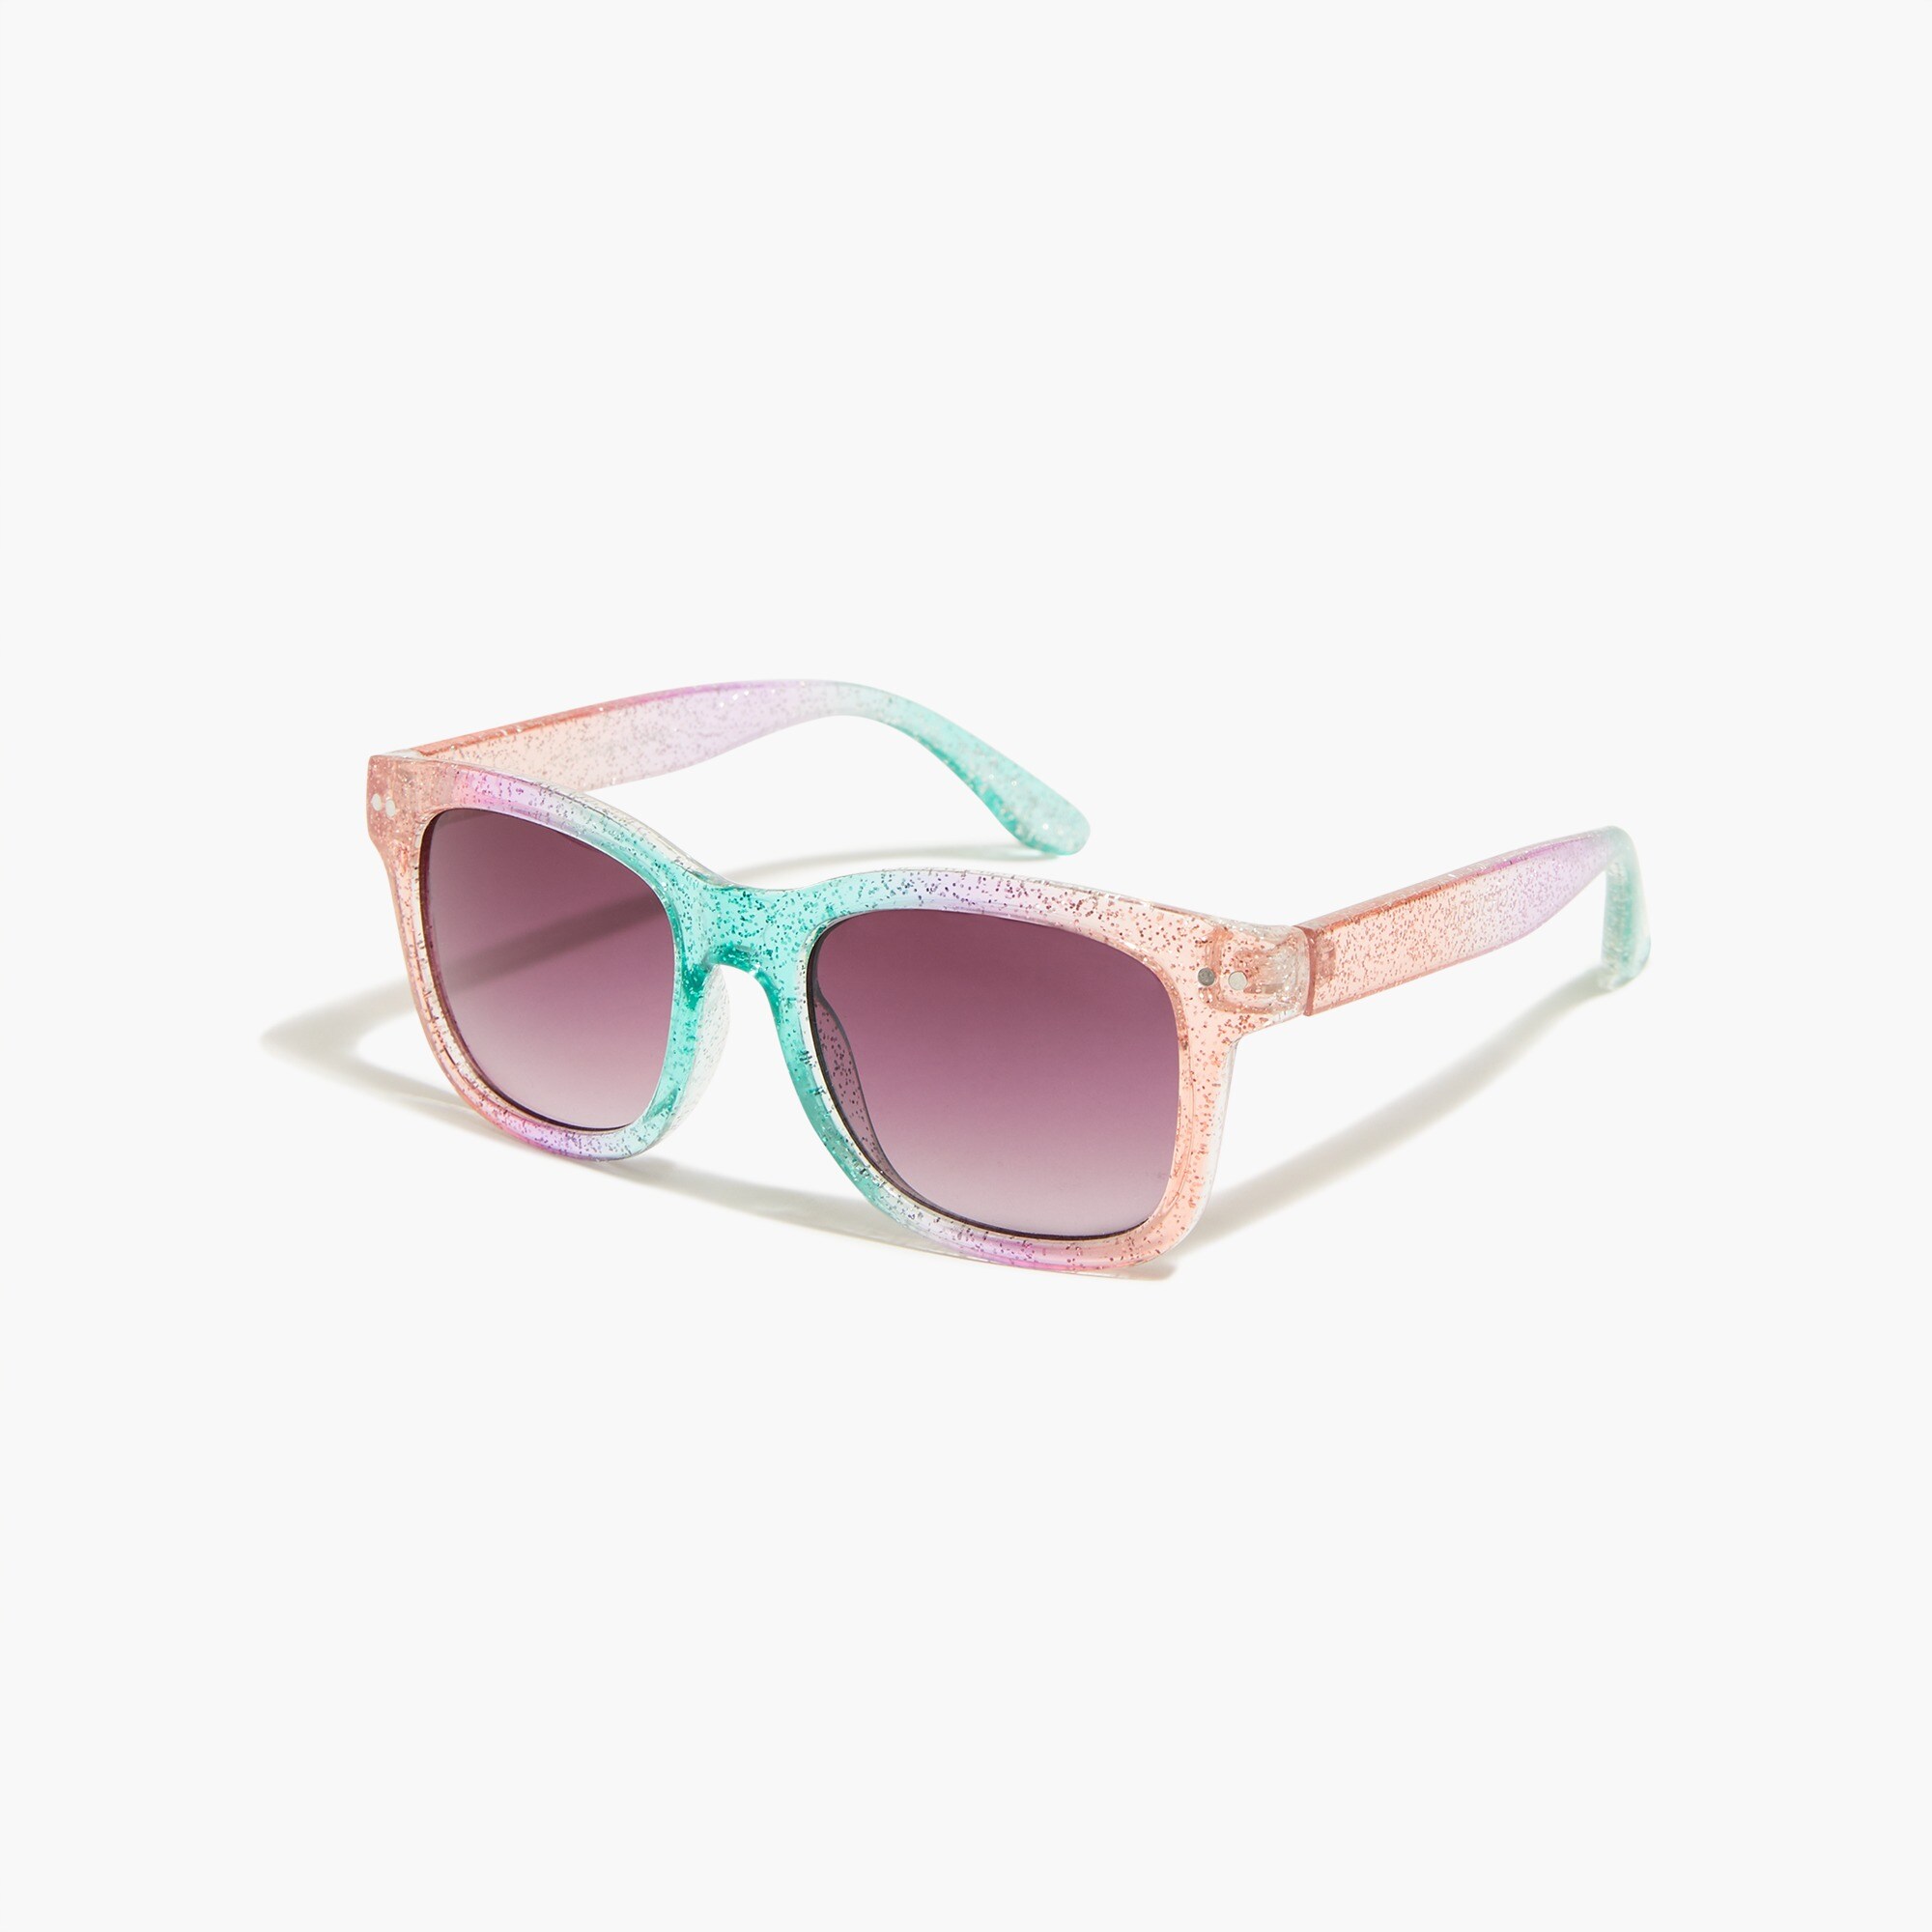 J Crew Crewcuts Girl's Pink/Yellow Shades Sunglasses 